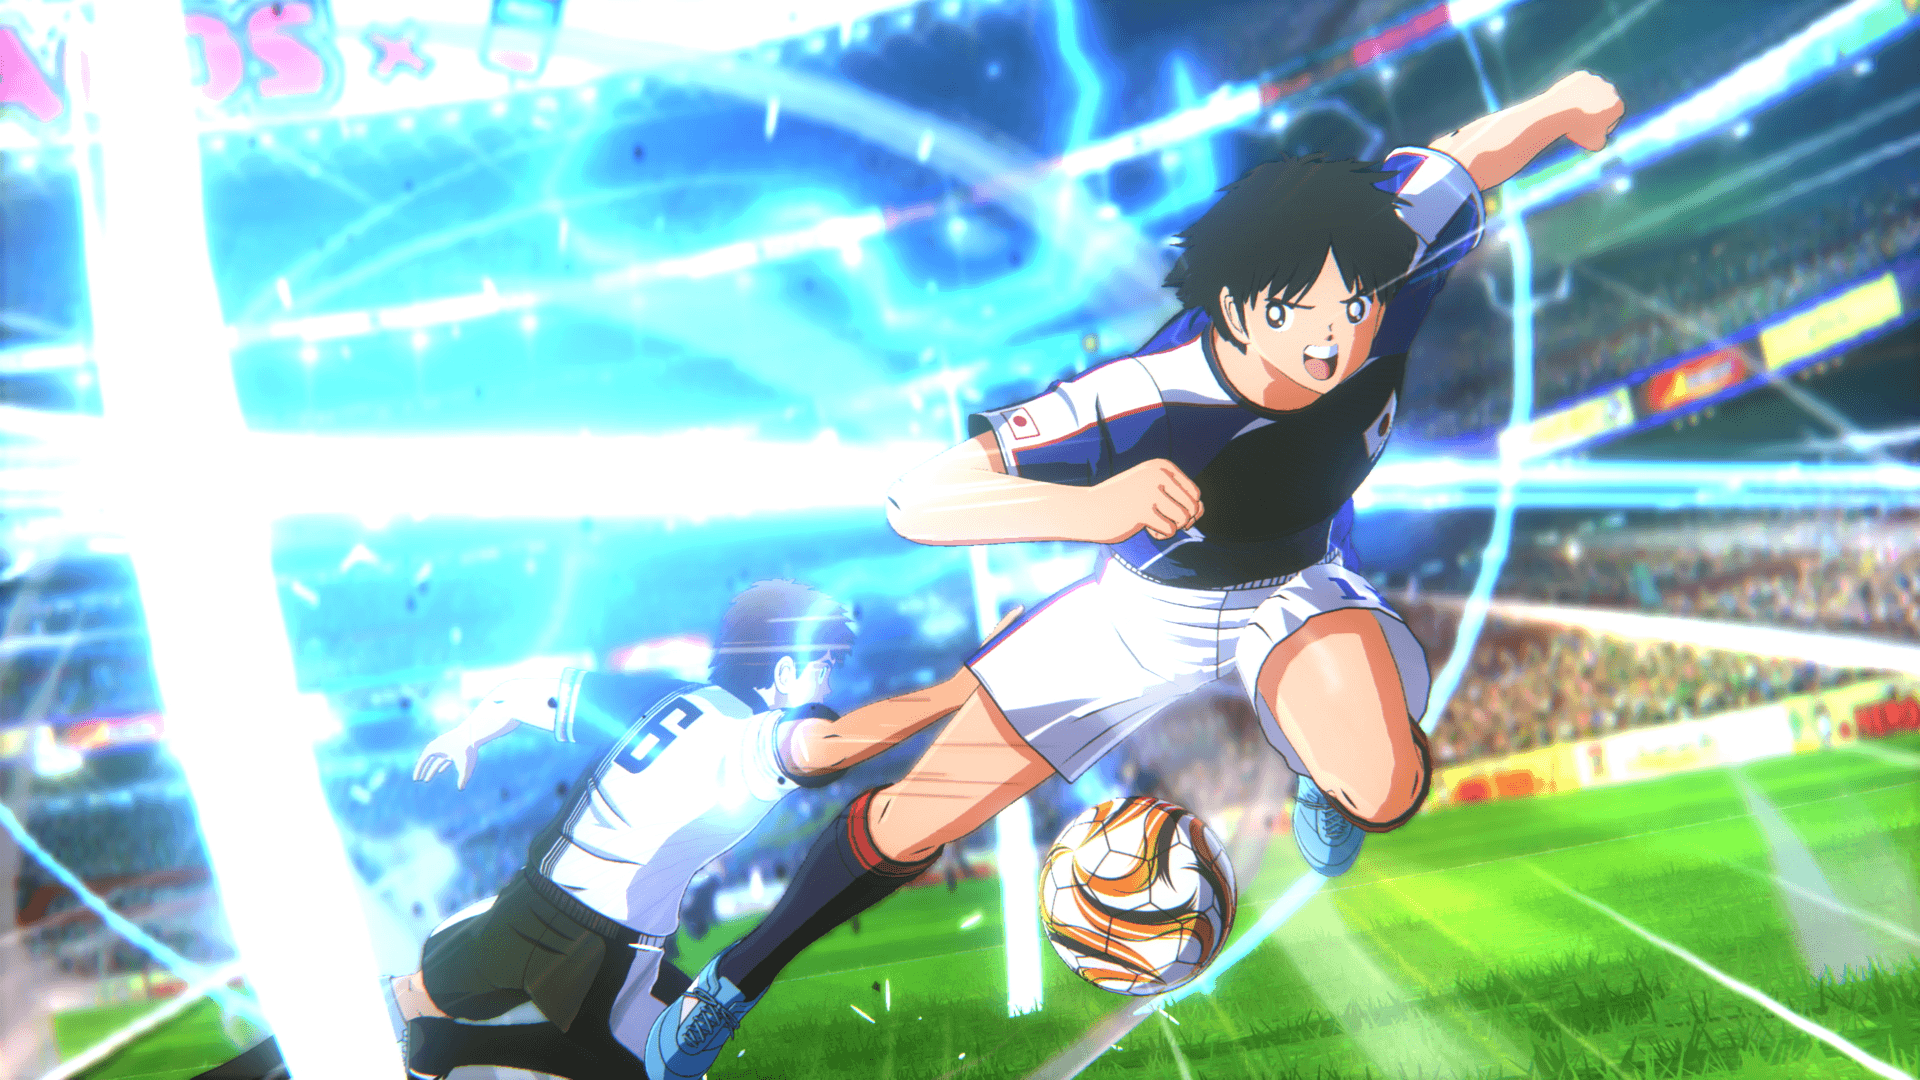 Preview: 'Captain Tsubasa' an anime take on soccer video game